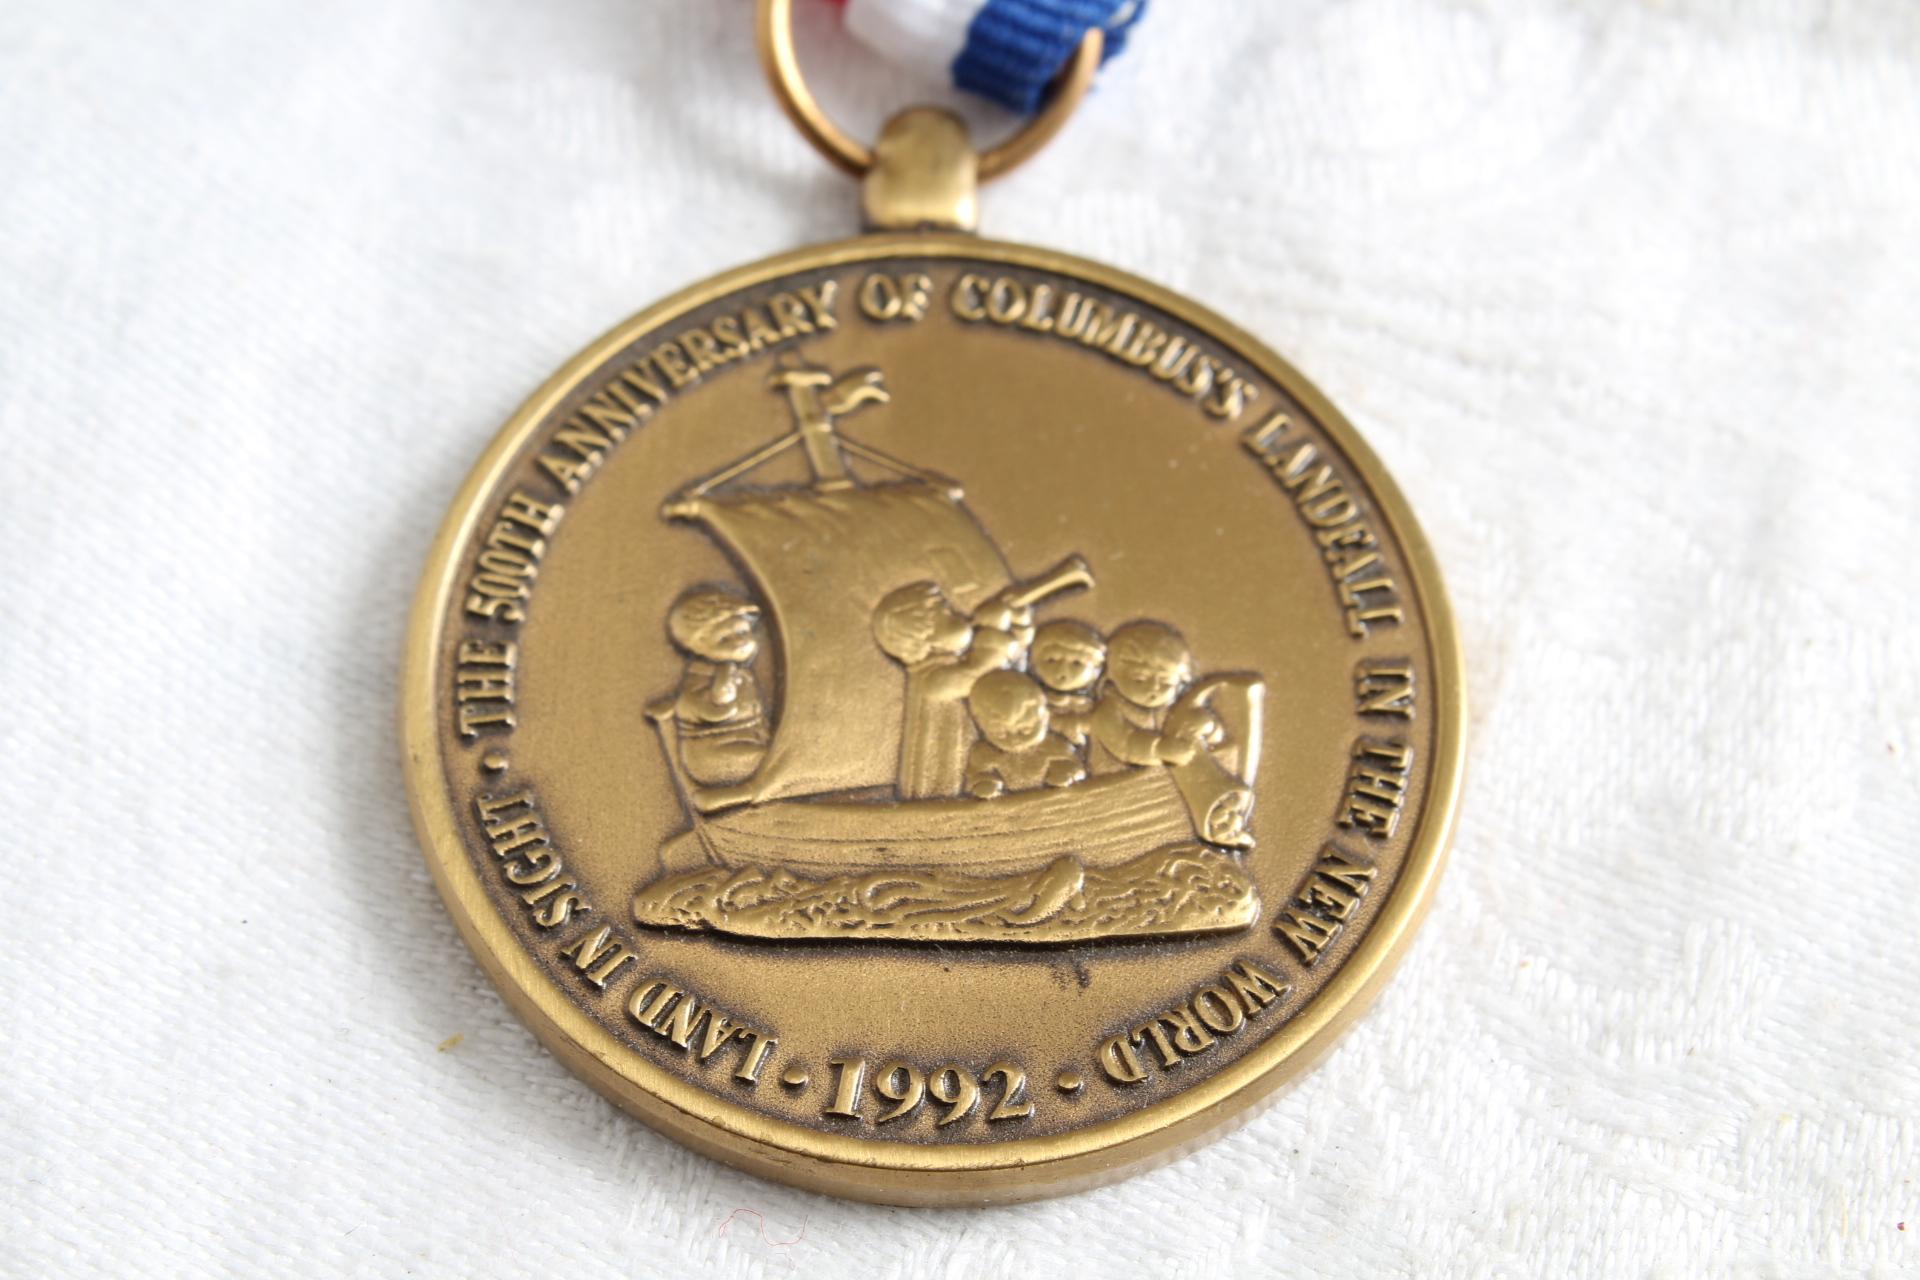 Vtg. Ronson Typhoon Lighter + 1492-1992 Quincentennial Hummel Medallion